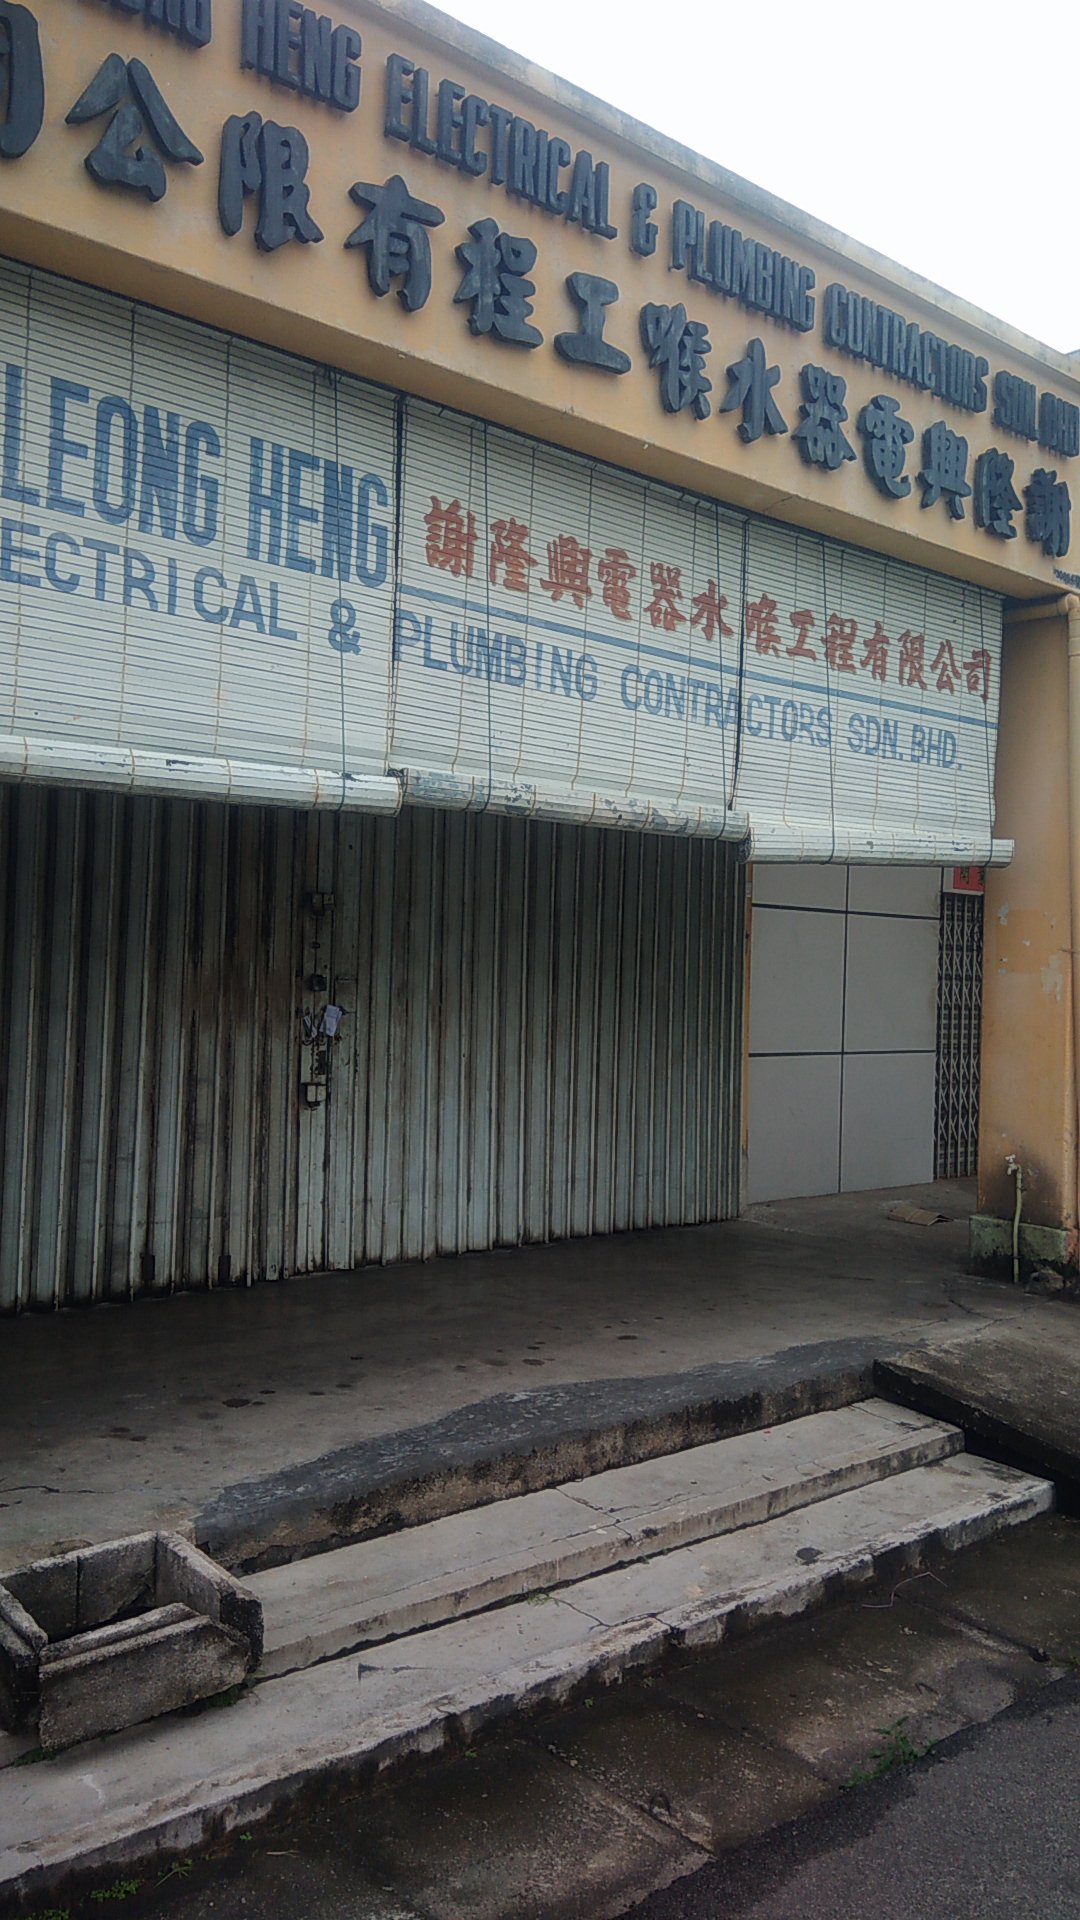 Sia Leong Heng Elect & Plumbing Contractors Sdn Bhd